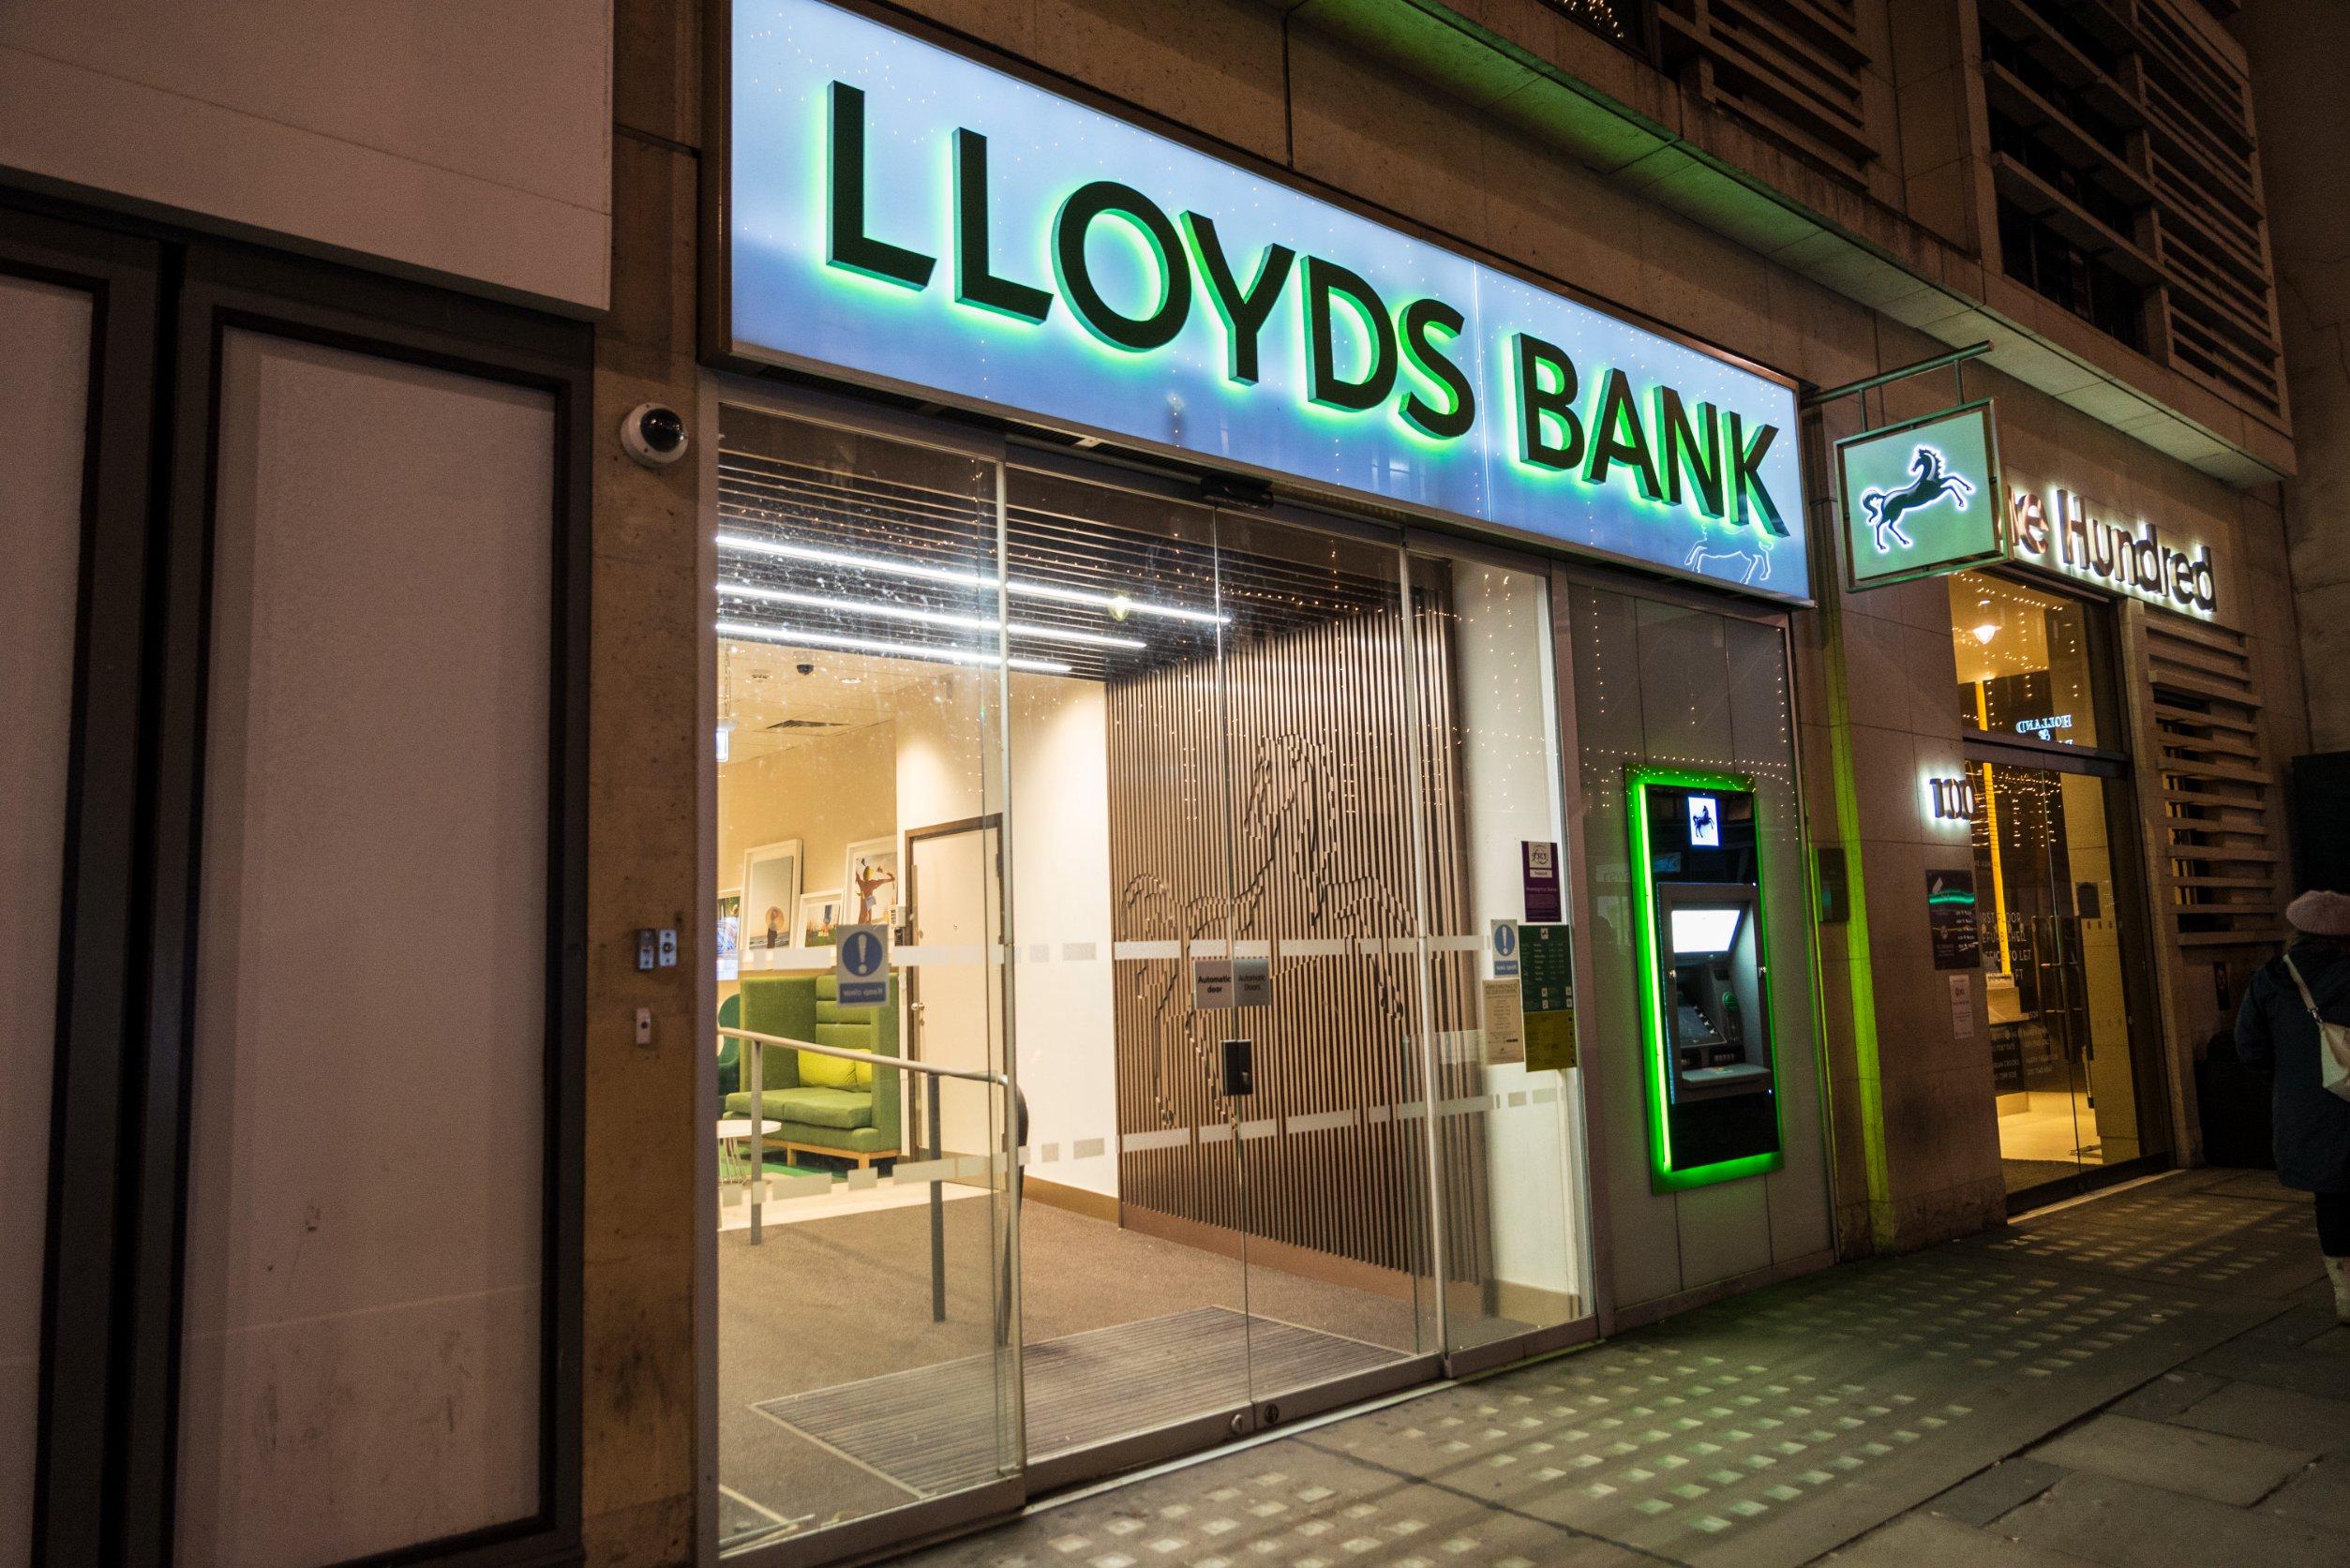 Lloyds Share Price Plummets as Investors Digest Flat Annual Profits